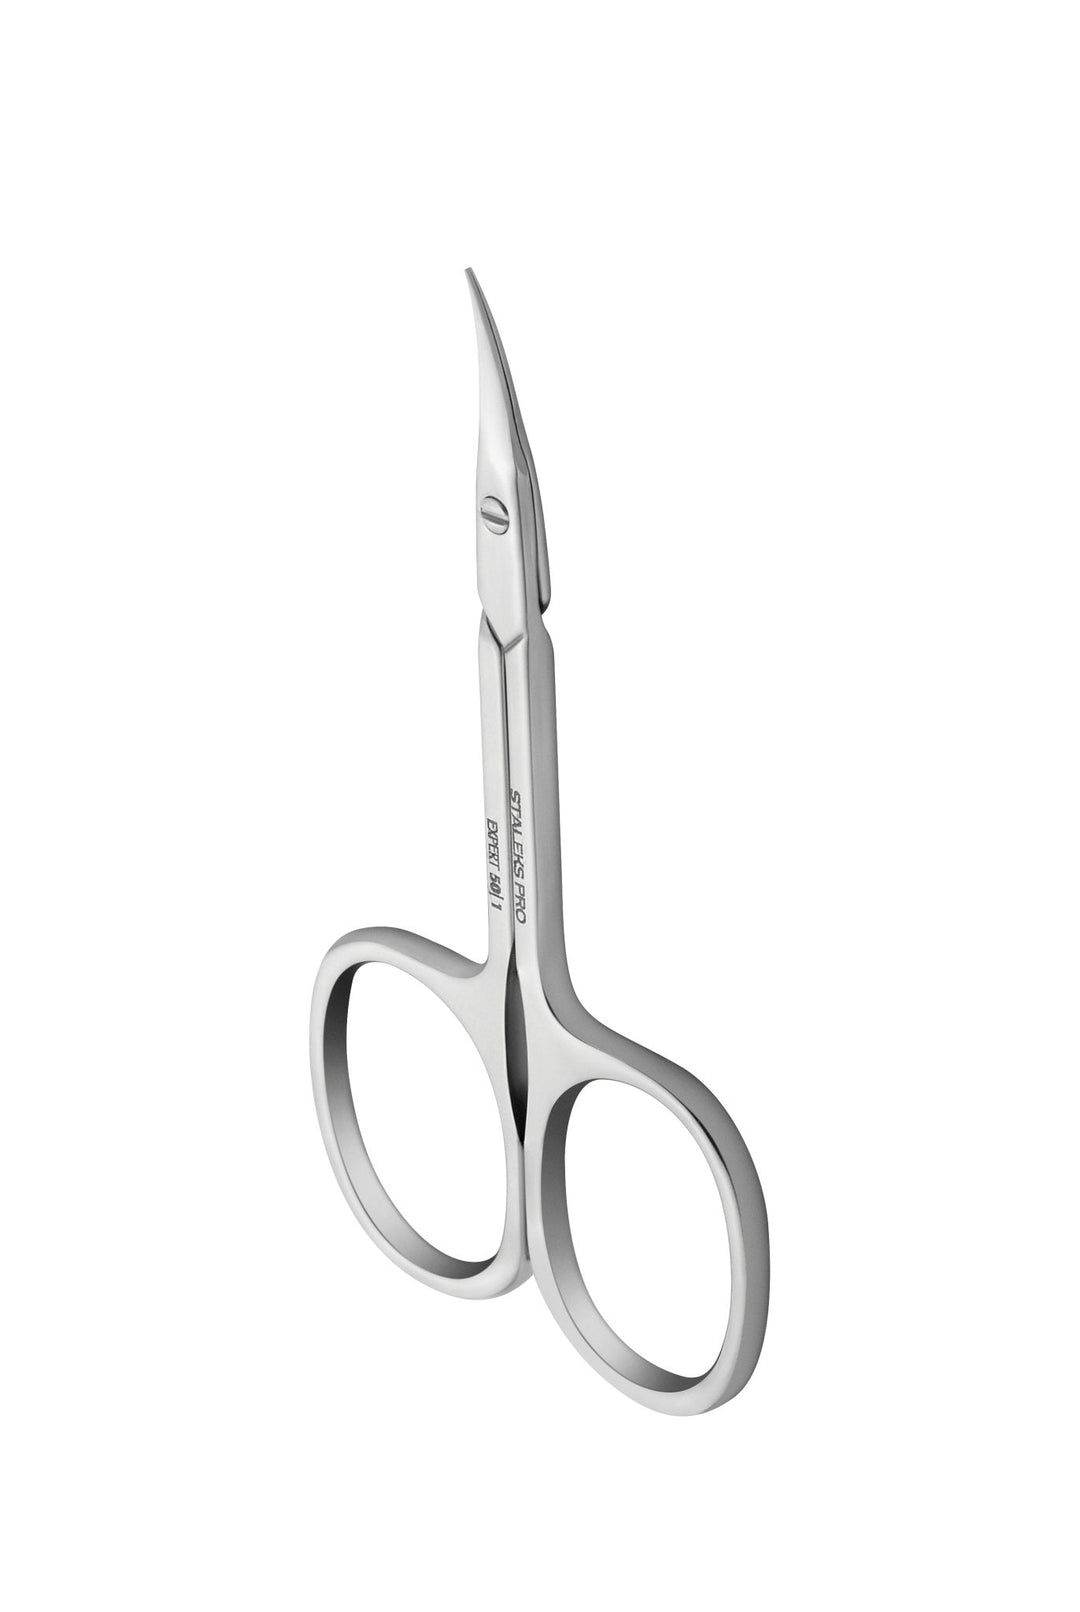 Staleks Pro Cuticle Scissors Expert 50 Type 1 — 18 mm blades | U-tools